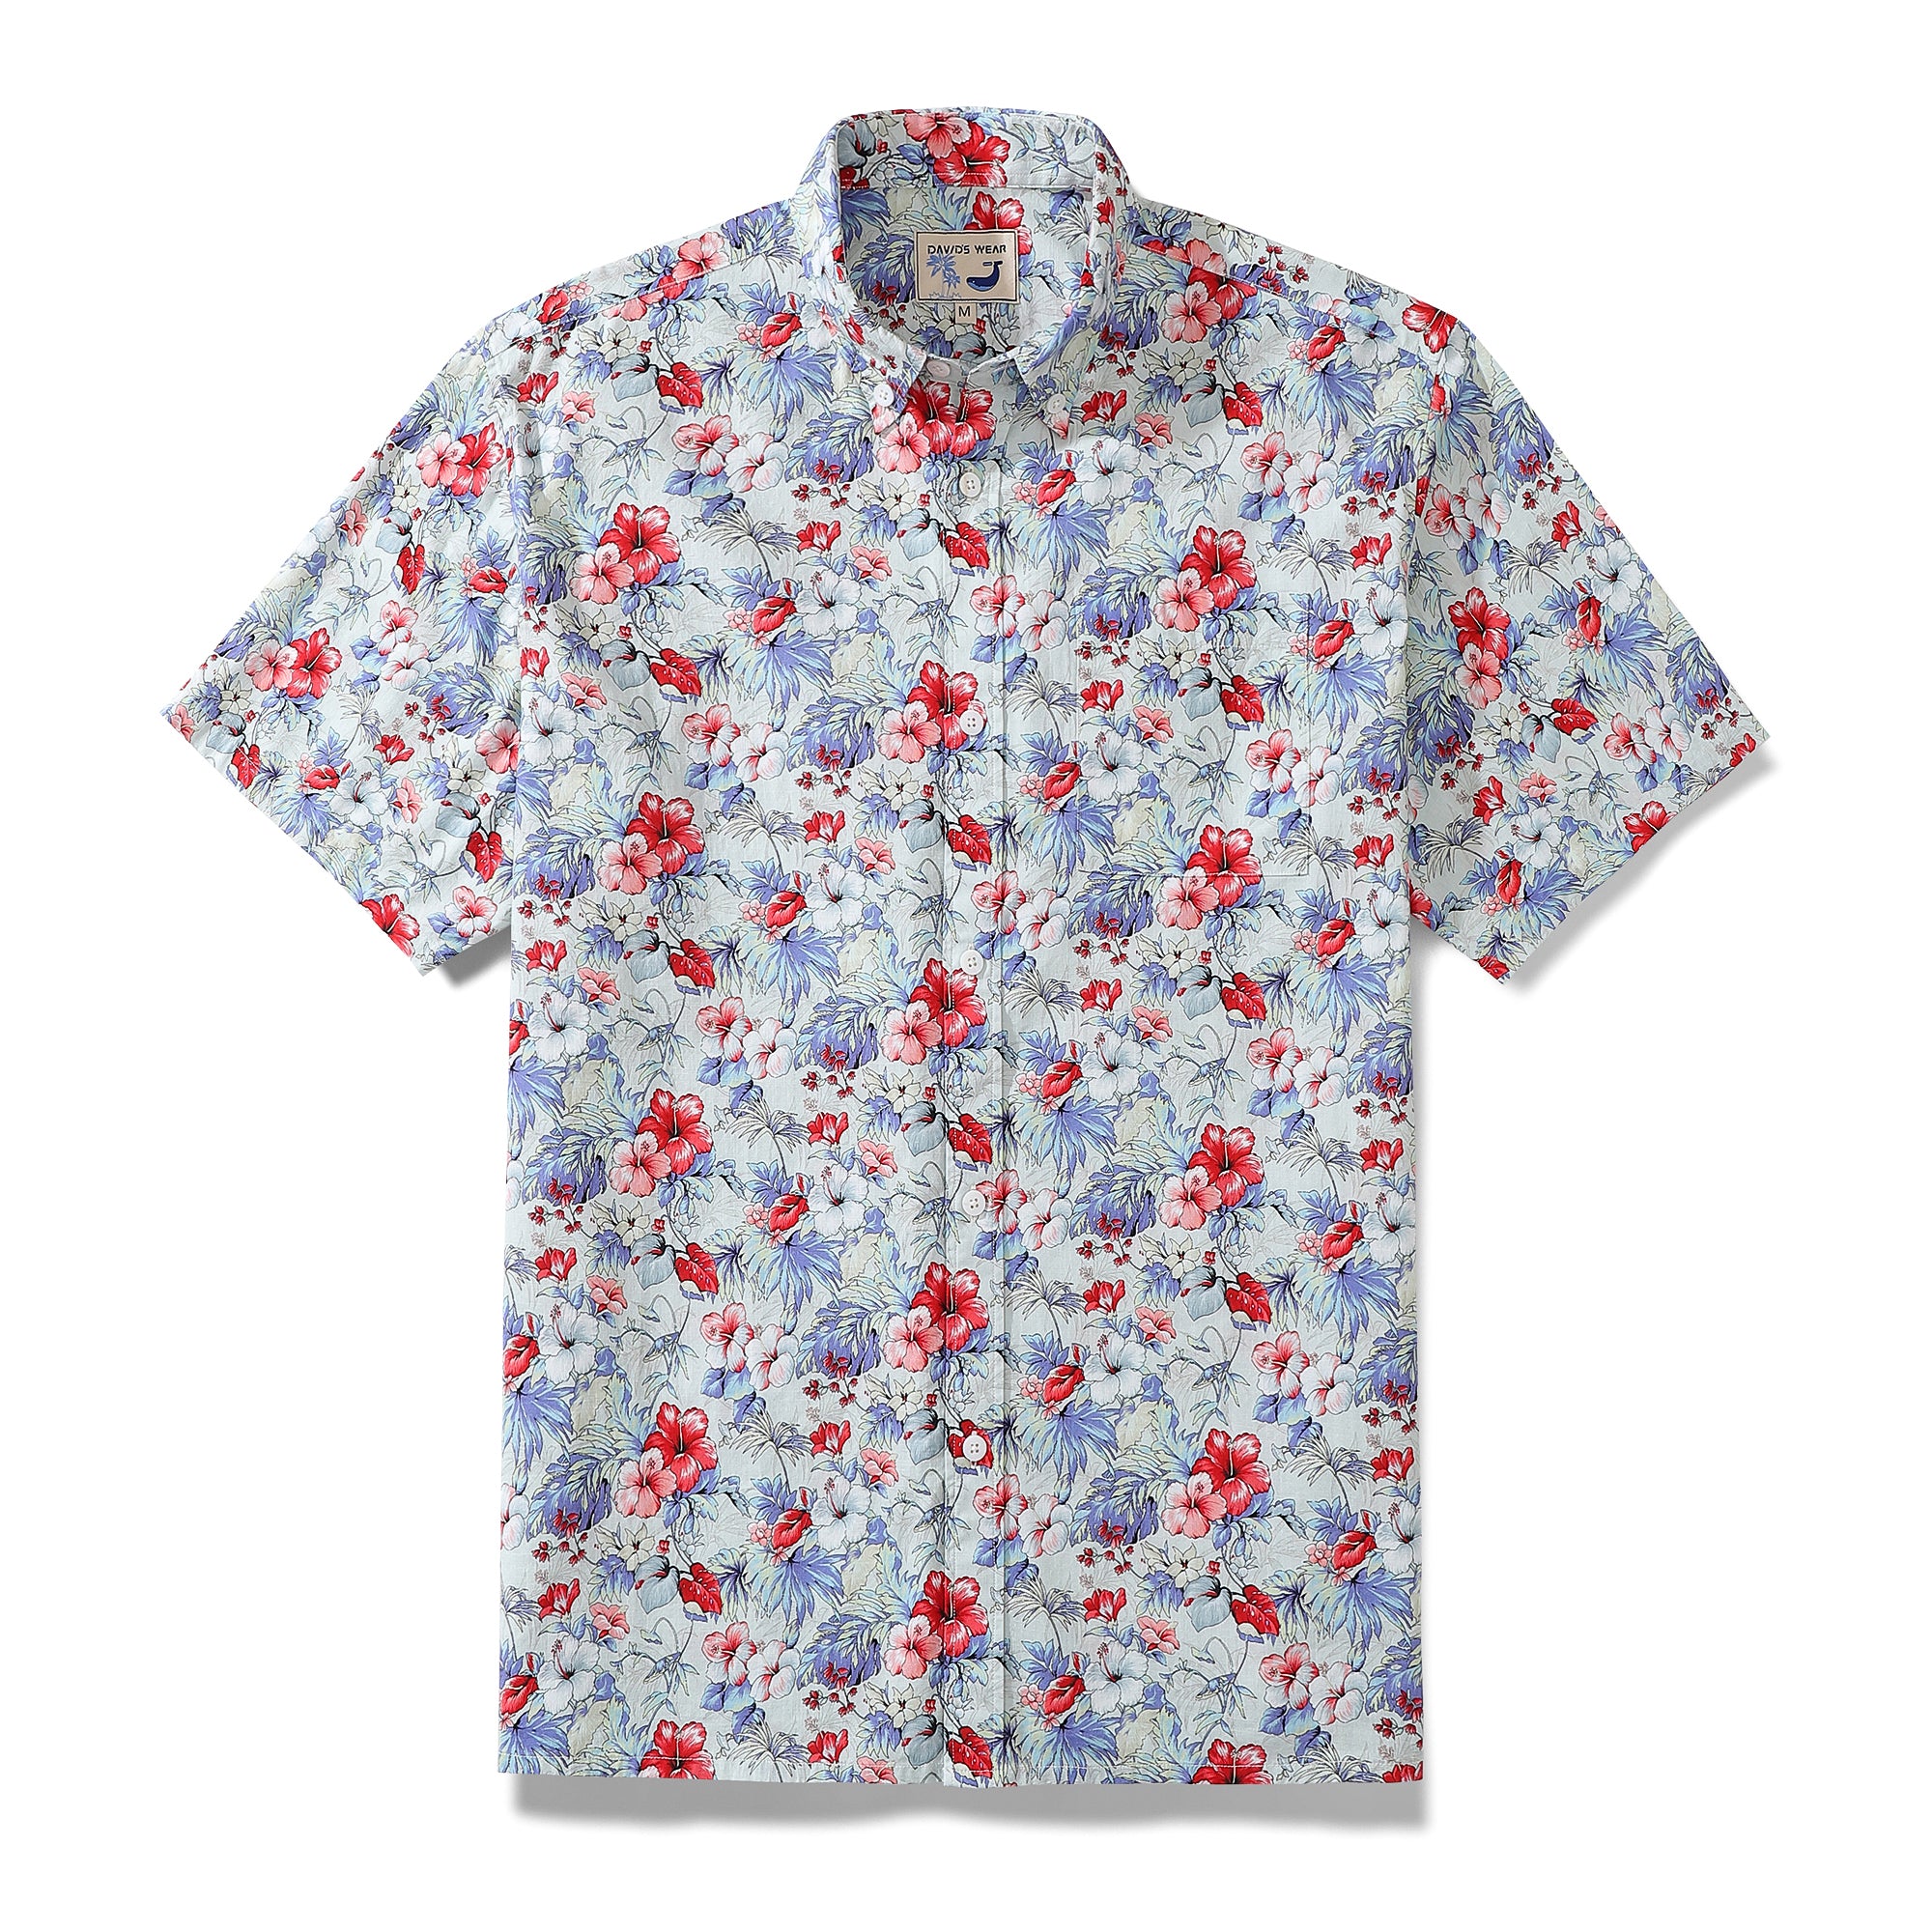 Men's Hawaiian Shirt Tropical Hibiscus Floral Cotton Aloha Shirt Button Down